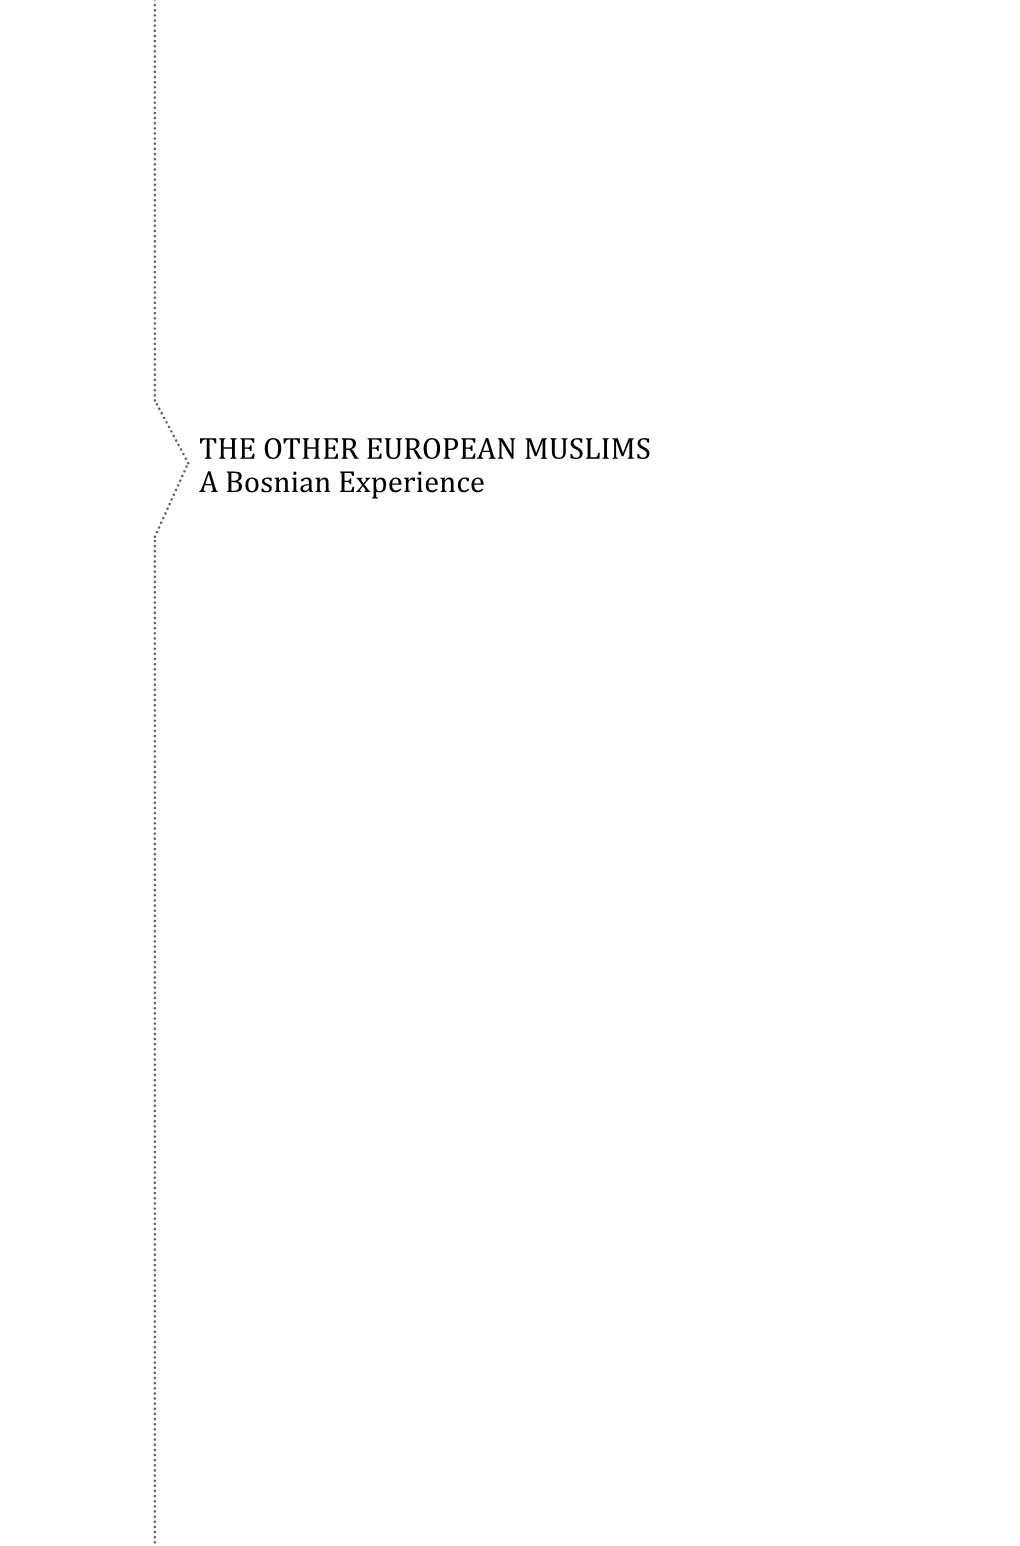 THE OTHER EUROPEAN MUSLIMS a Bosnian Experience